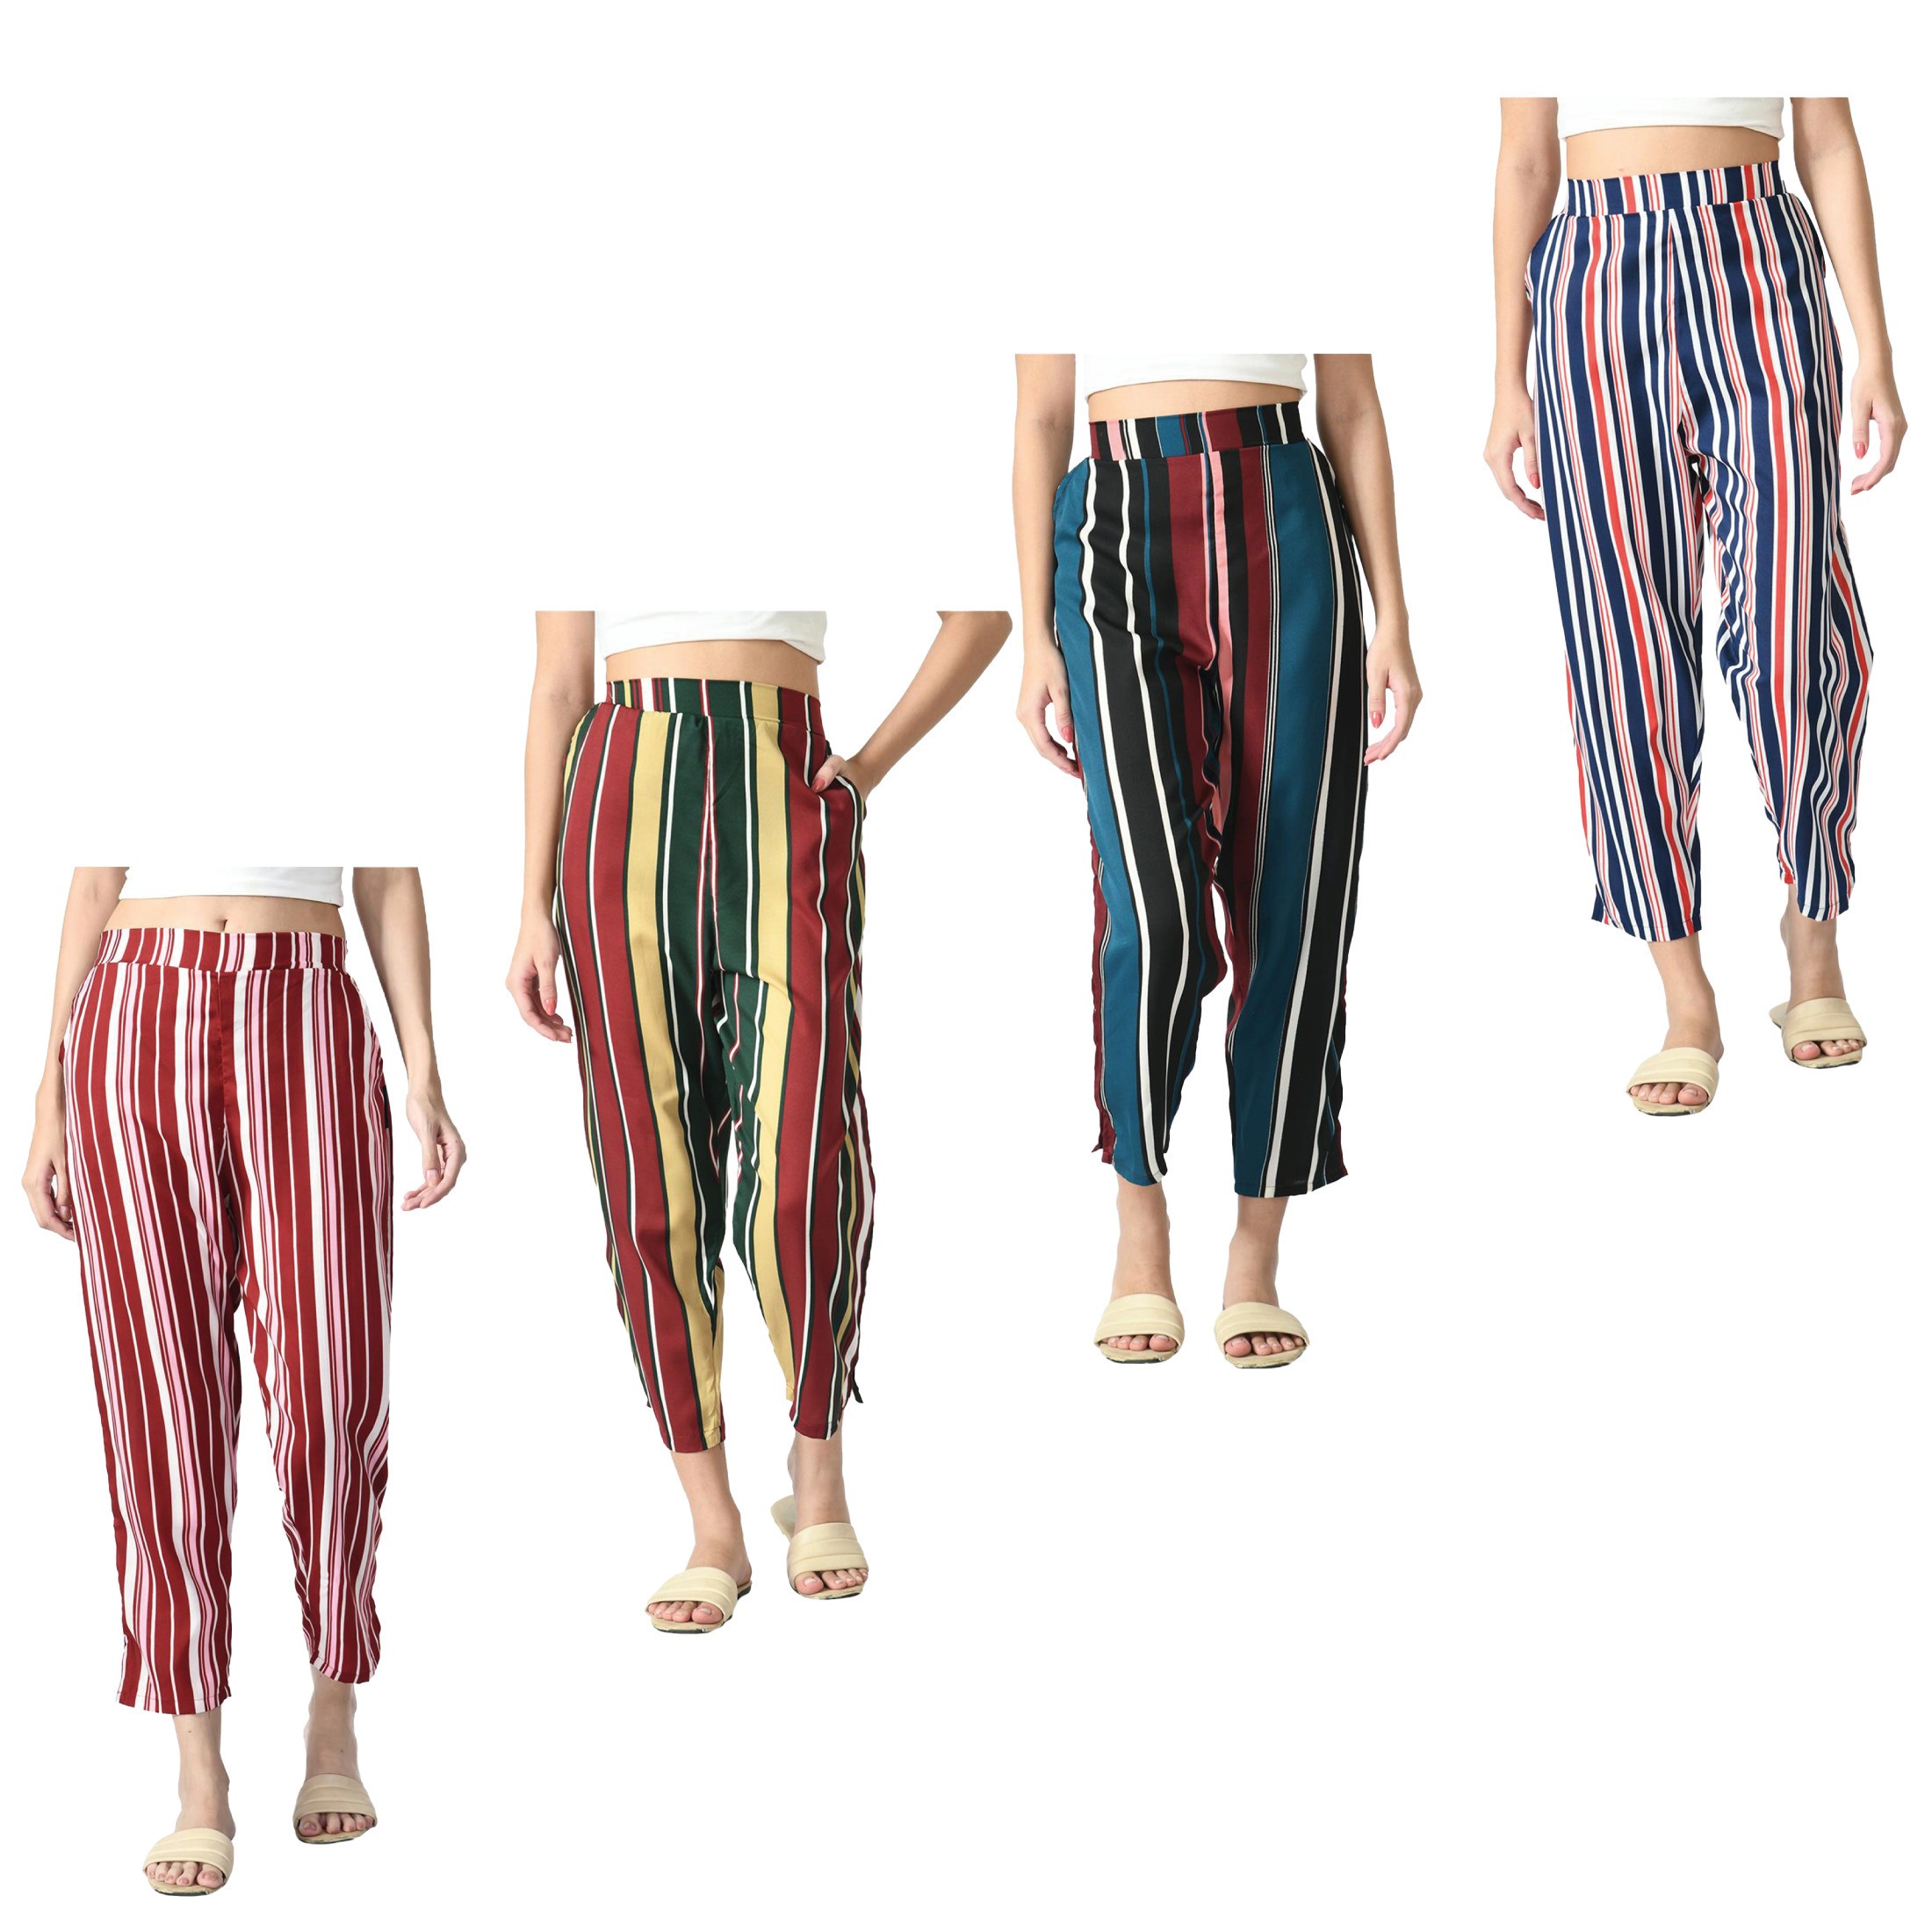 2-Pack: Ladies Summer Soft Fashionable Striped Wide Open Boho Leg Palazzo Pants - X-Large